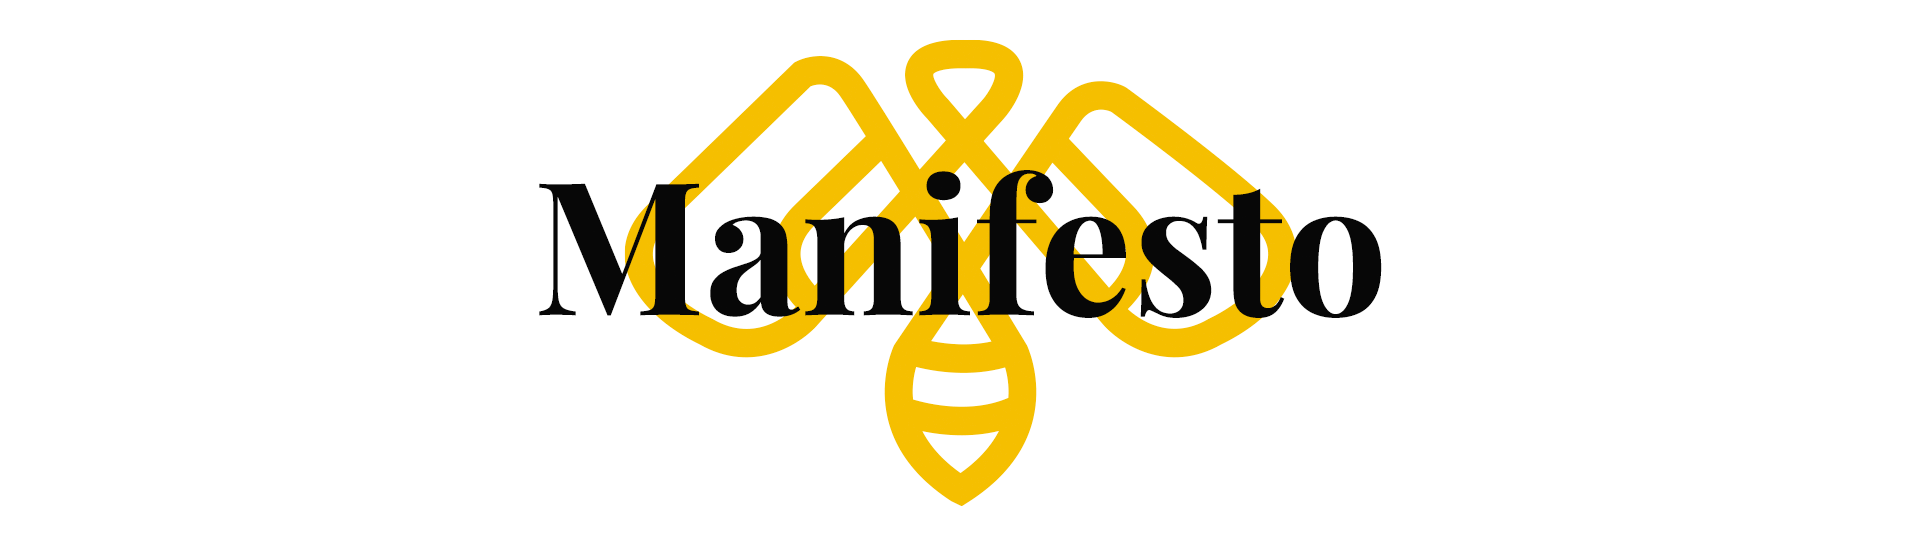 Beeasy_manifesto